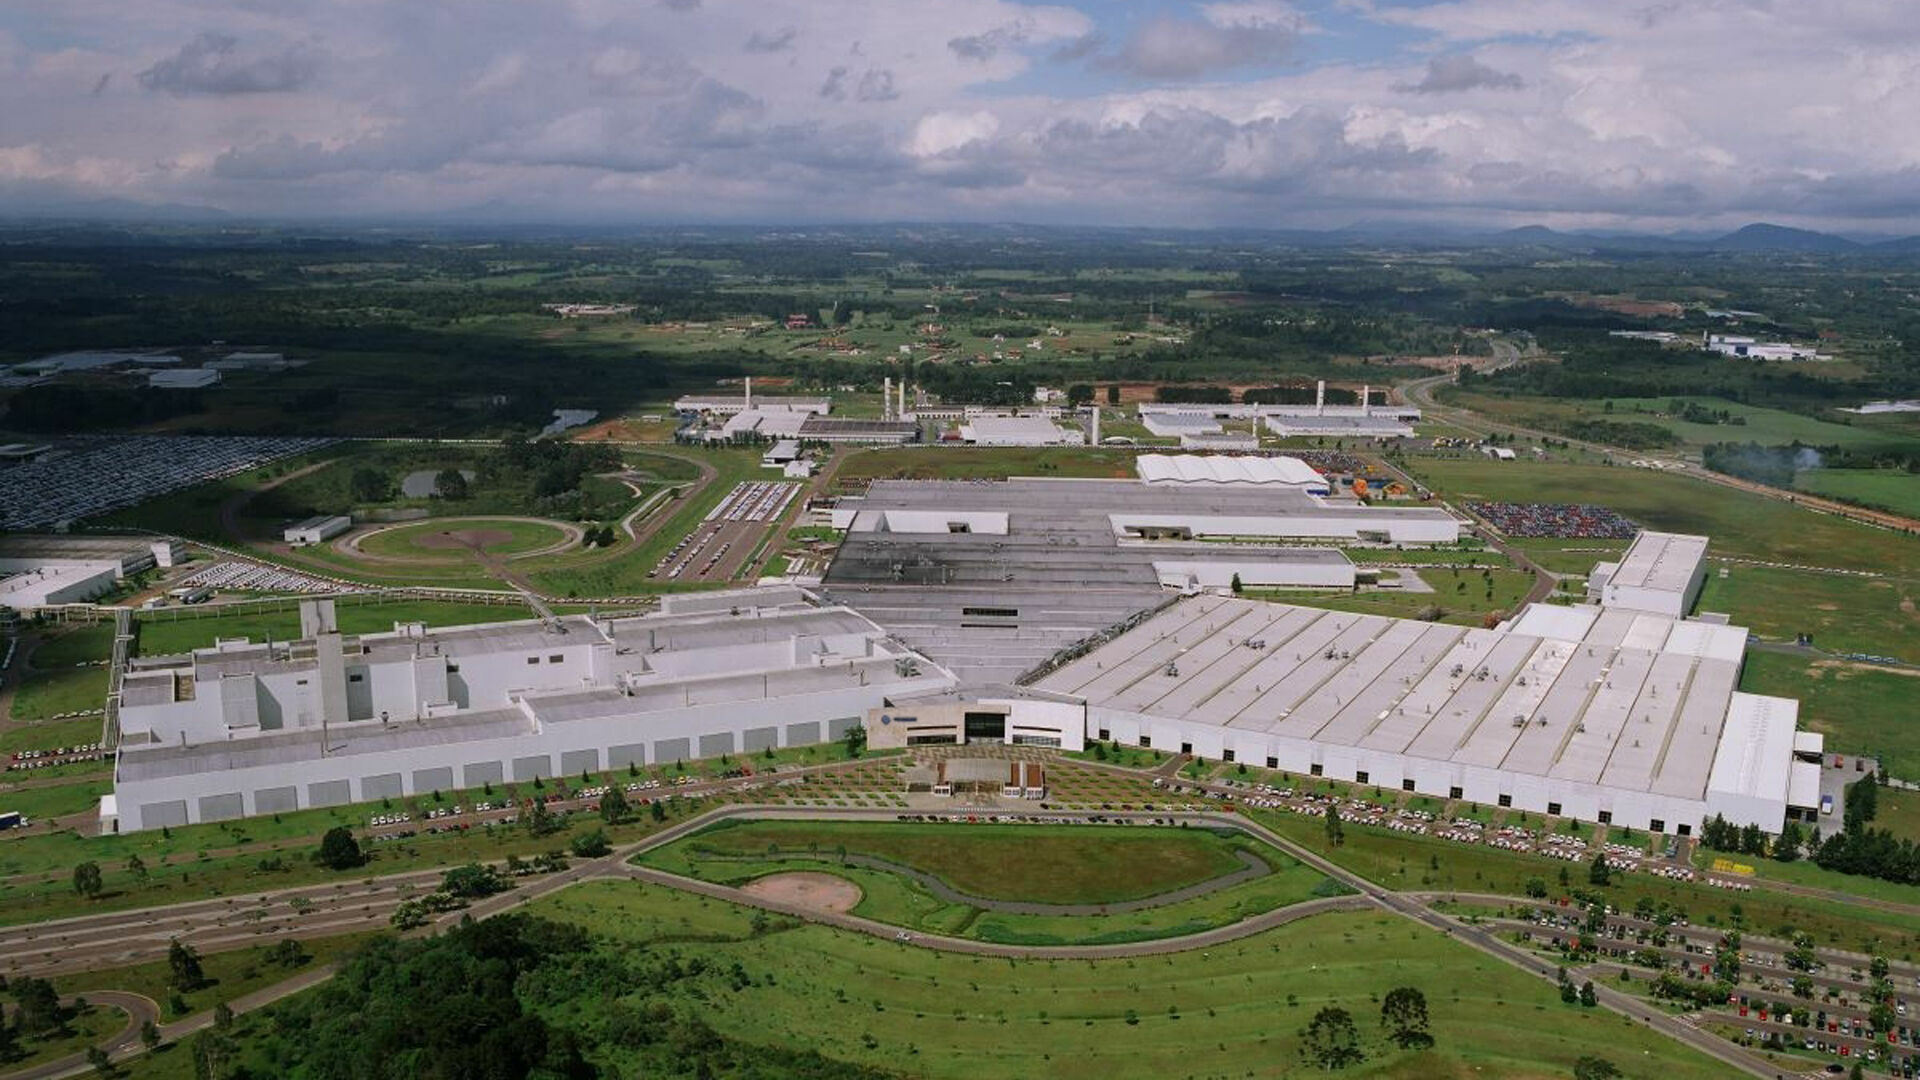 Volkswagen do Brasil Industria de Veiculos Automotores Ltda. in Curitiba, Brazil